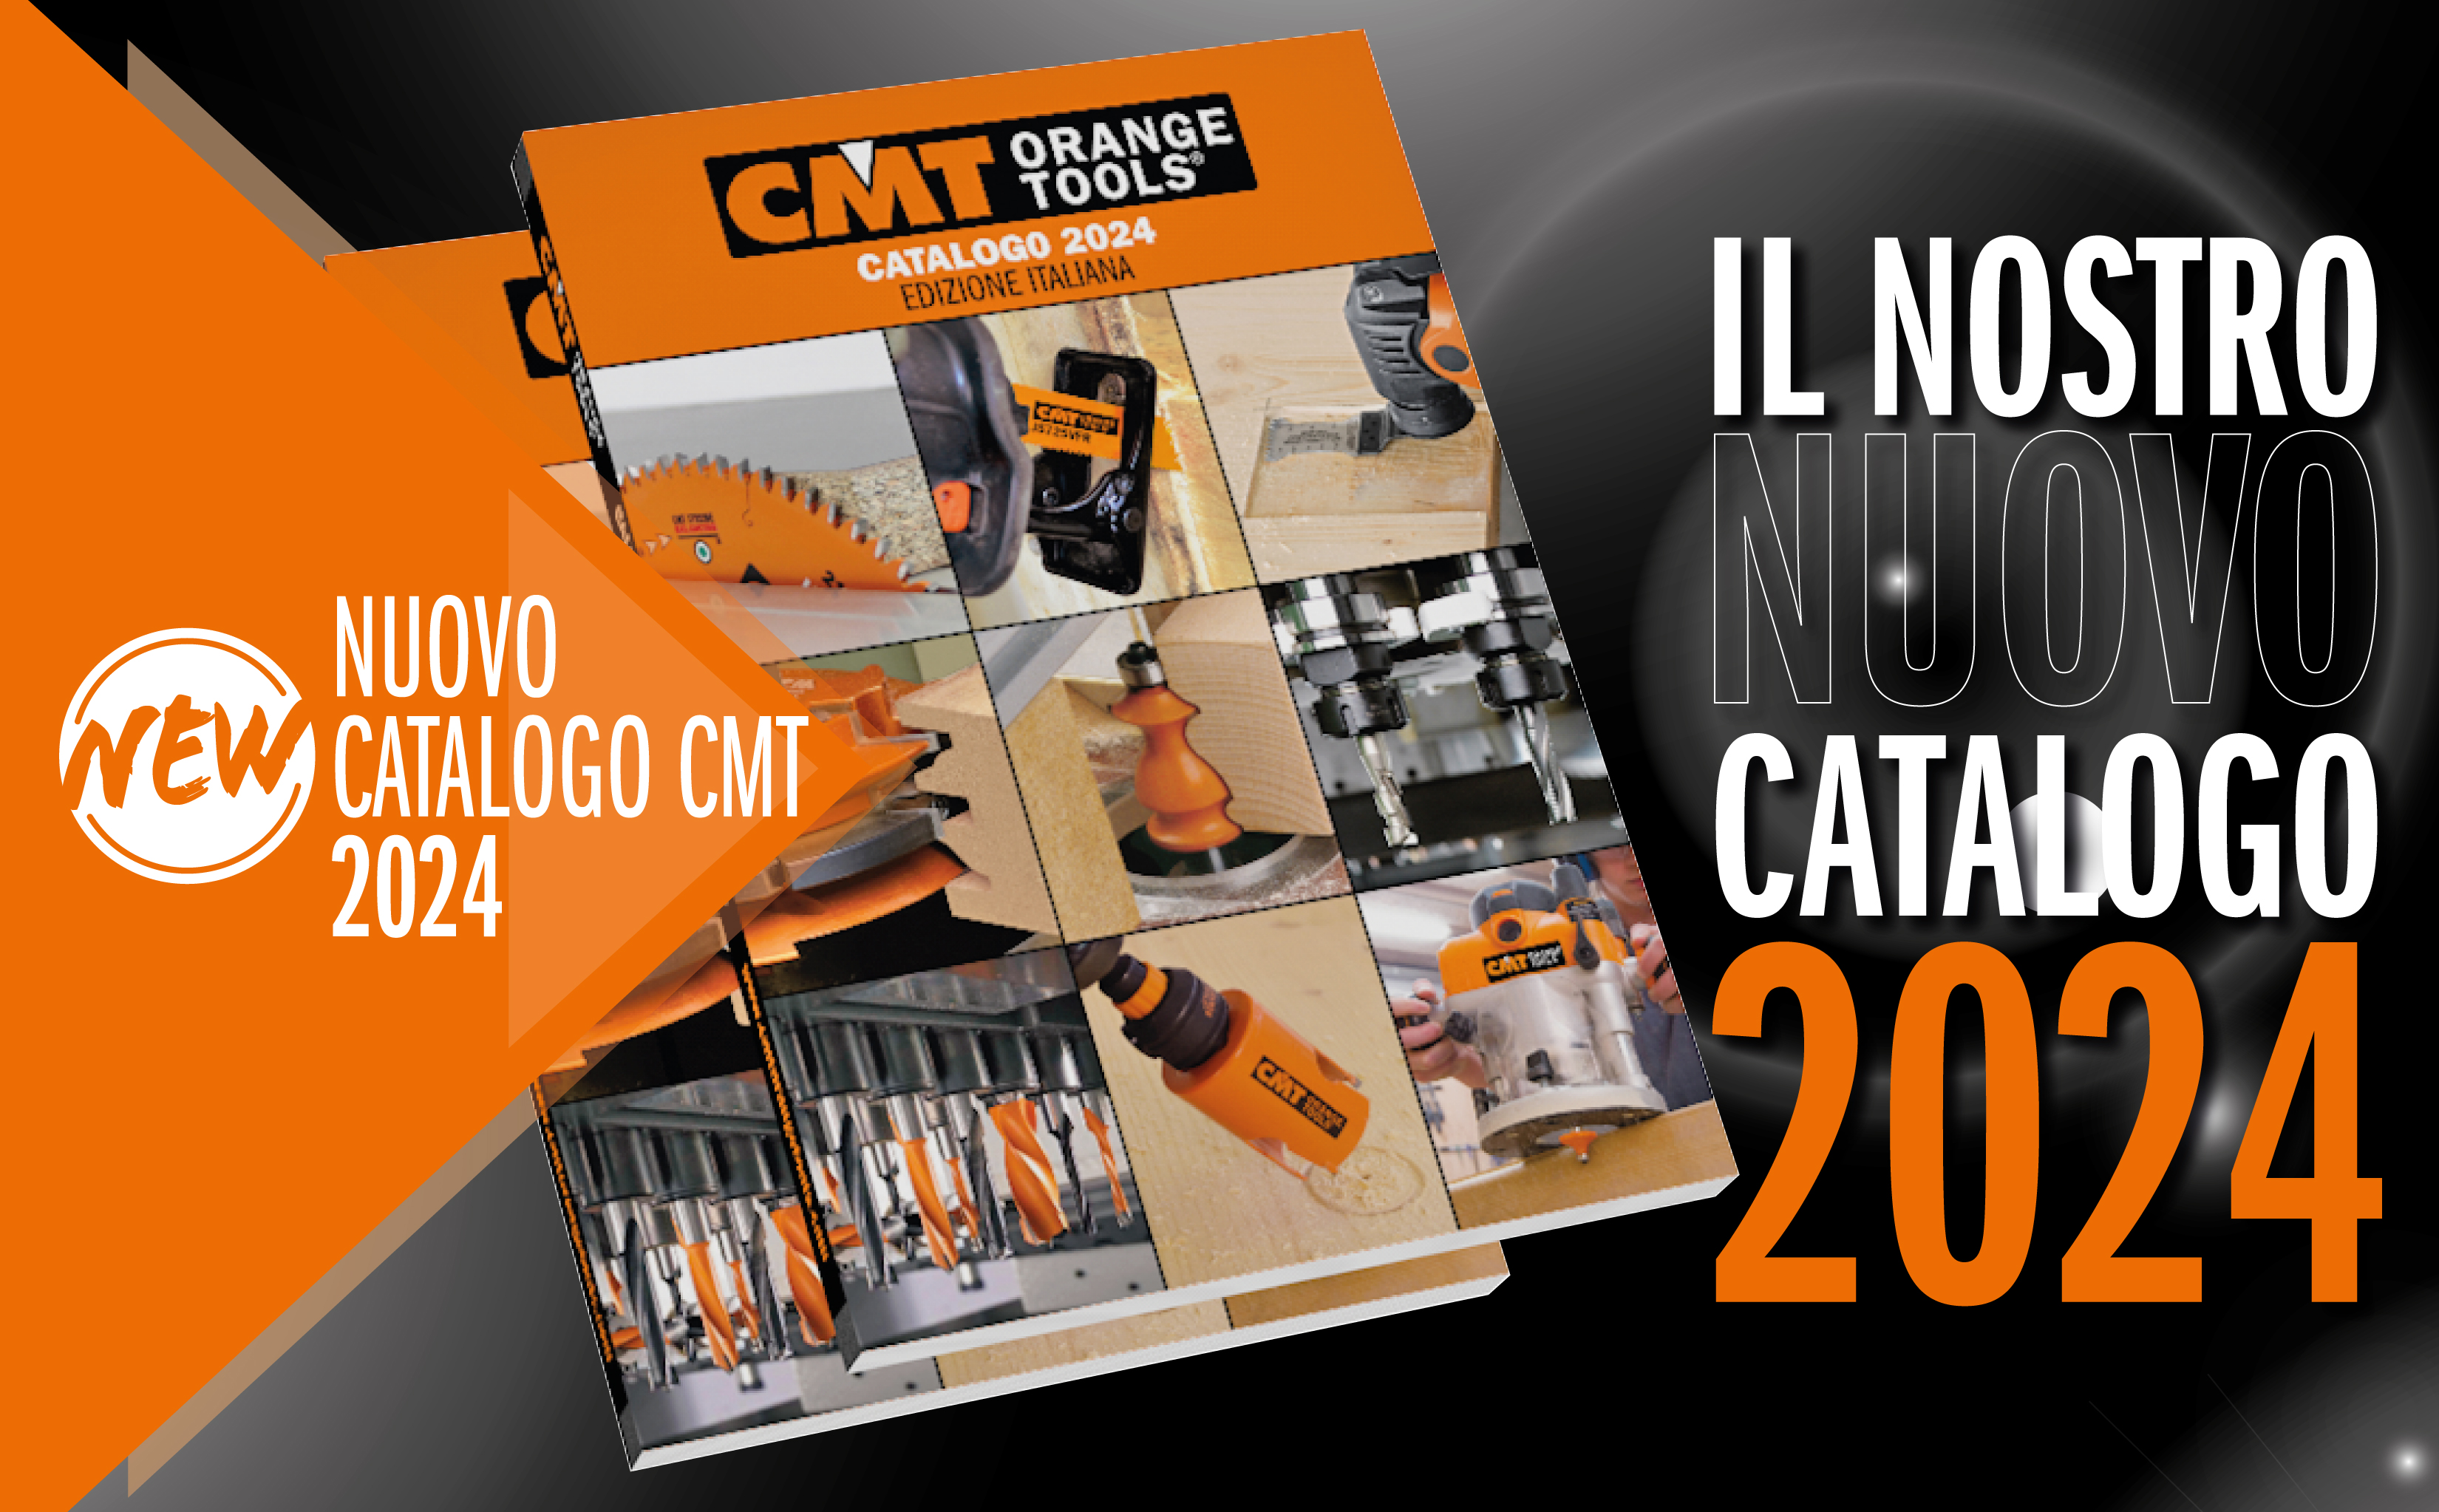 Nuovo Catalogo Italia 2024. On line!